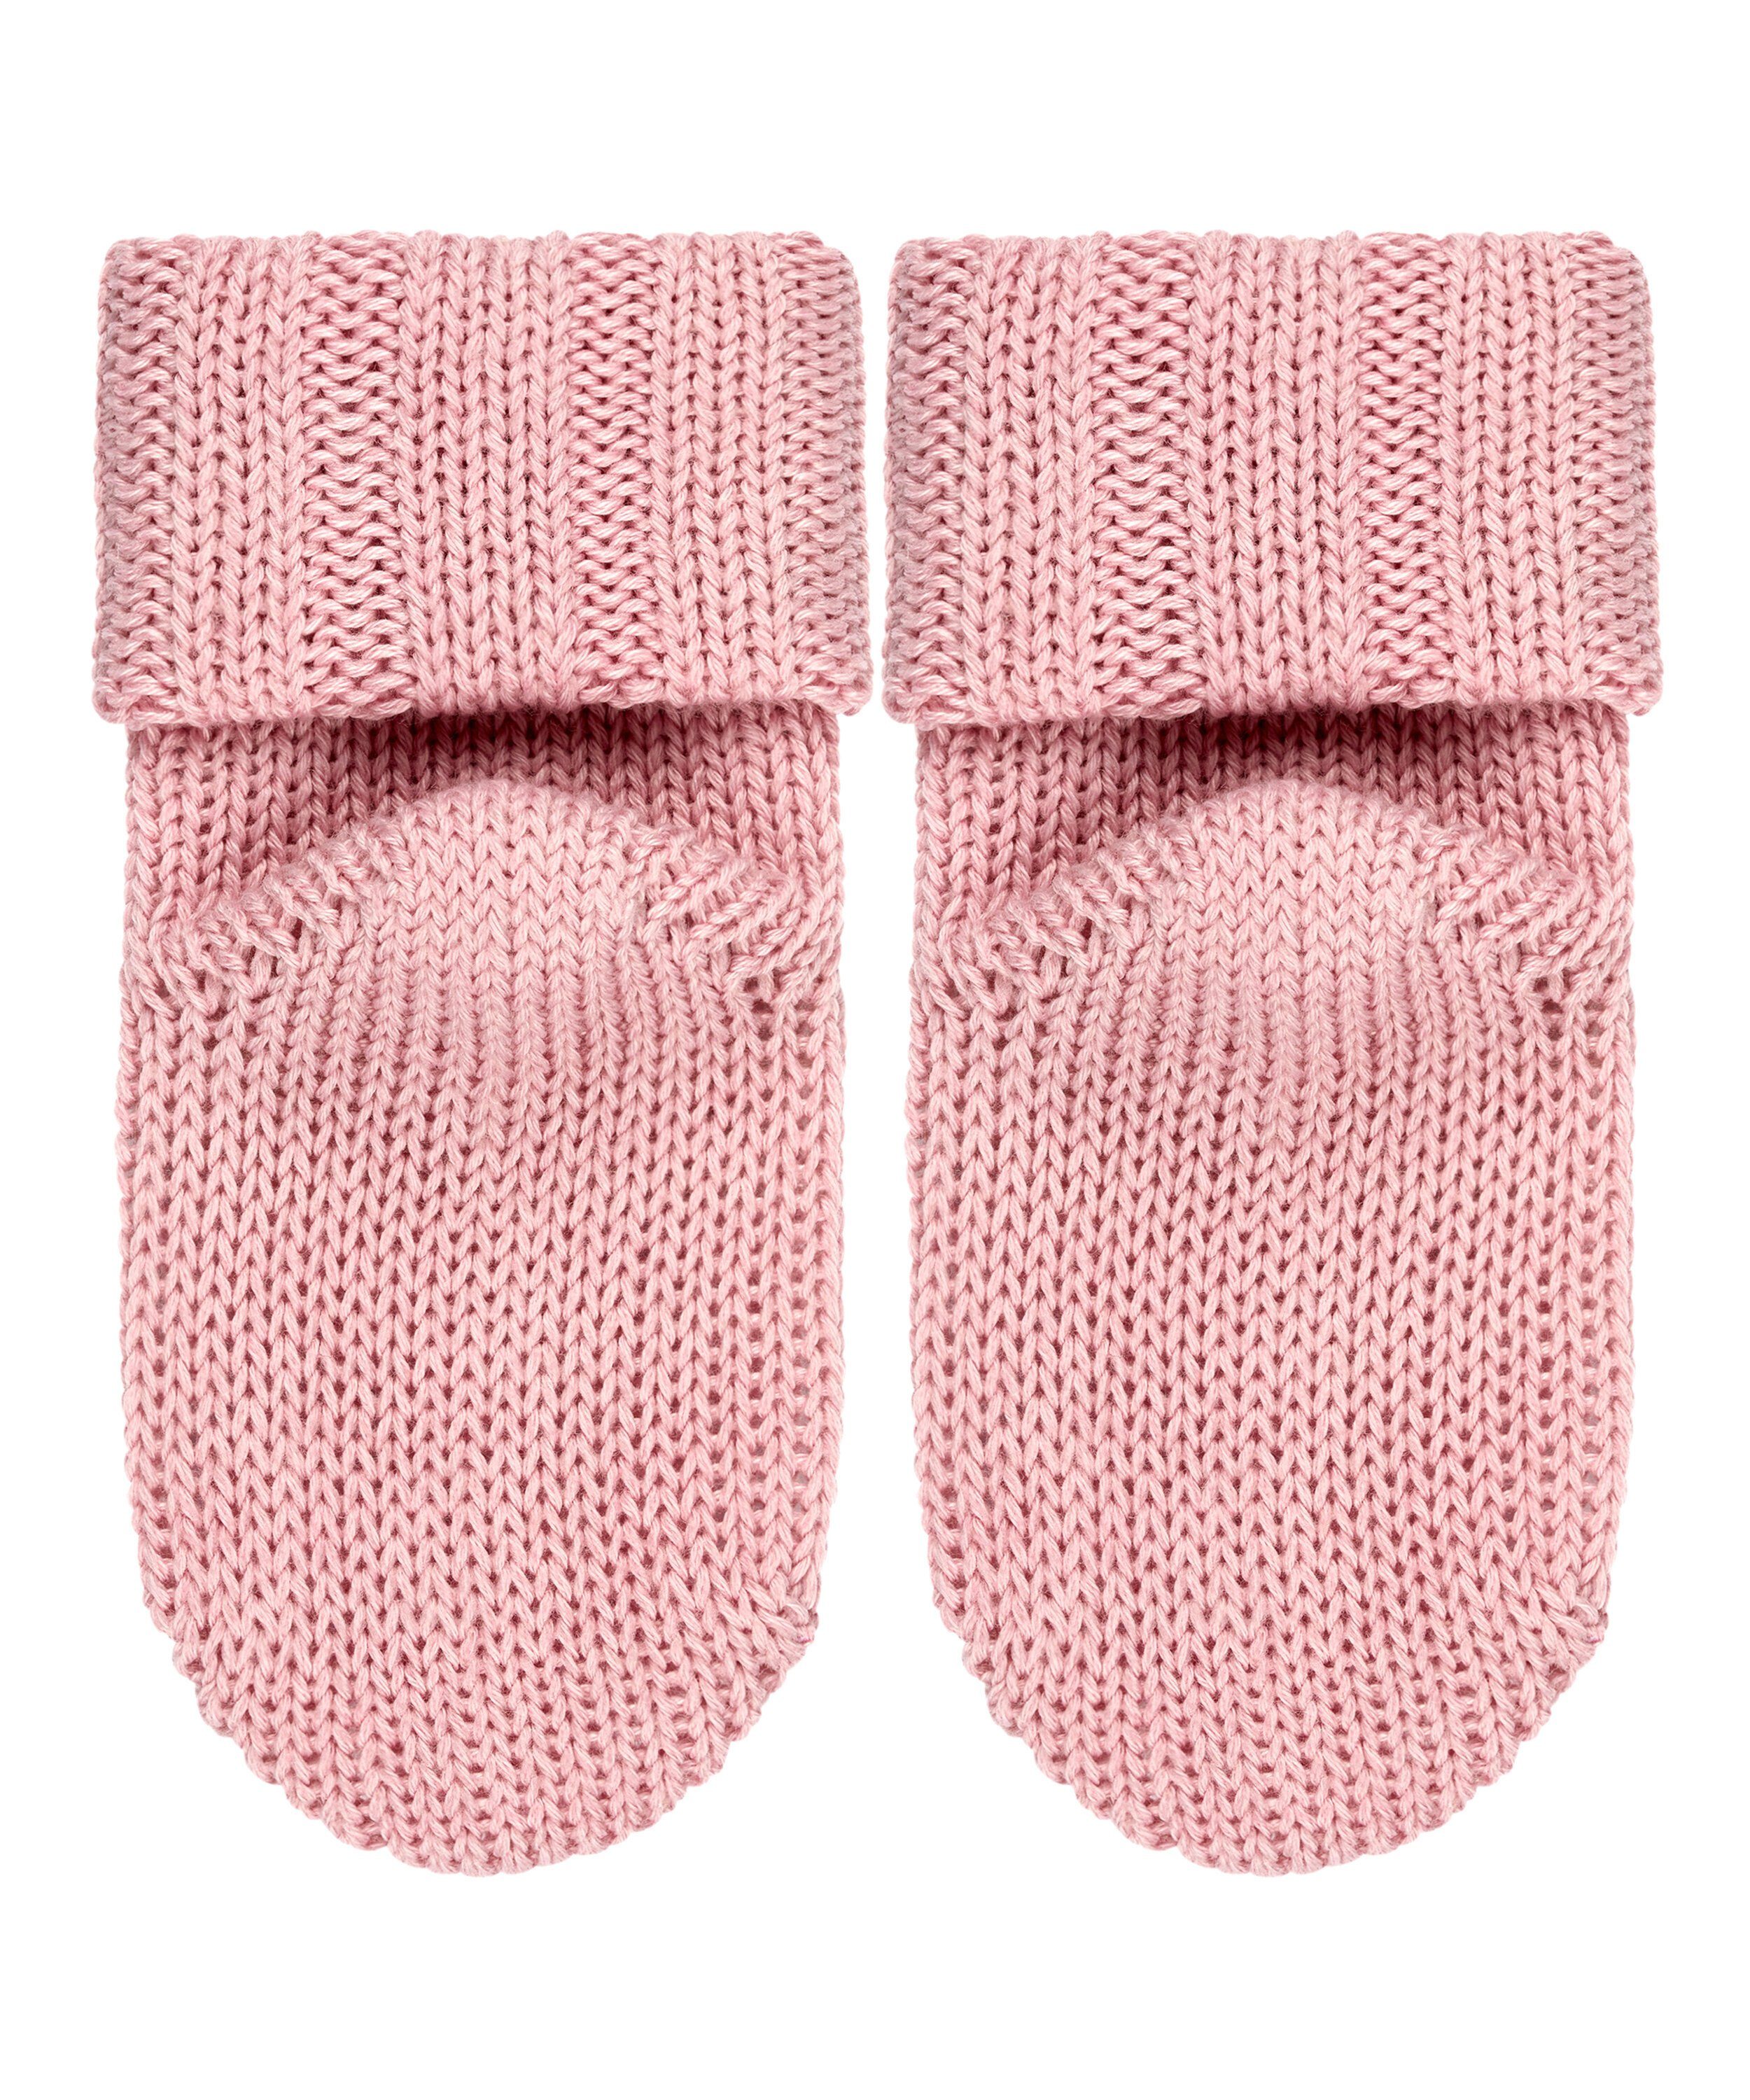 Flausch (8663) thulit (1-Paar) FALKE Socken